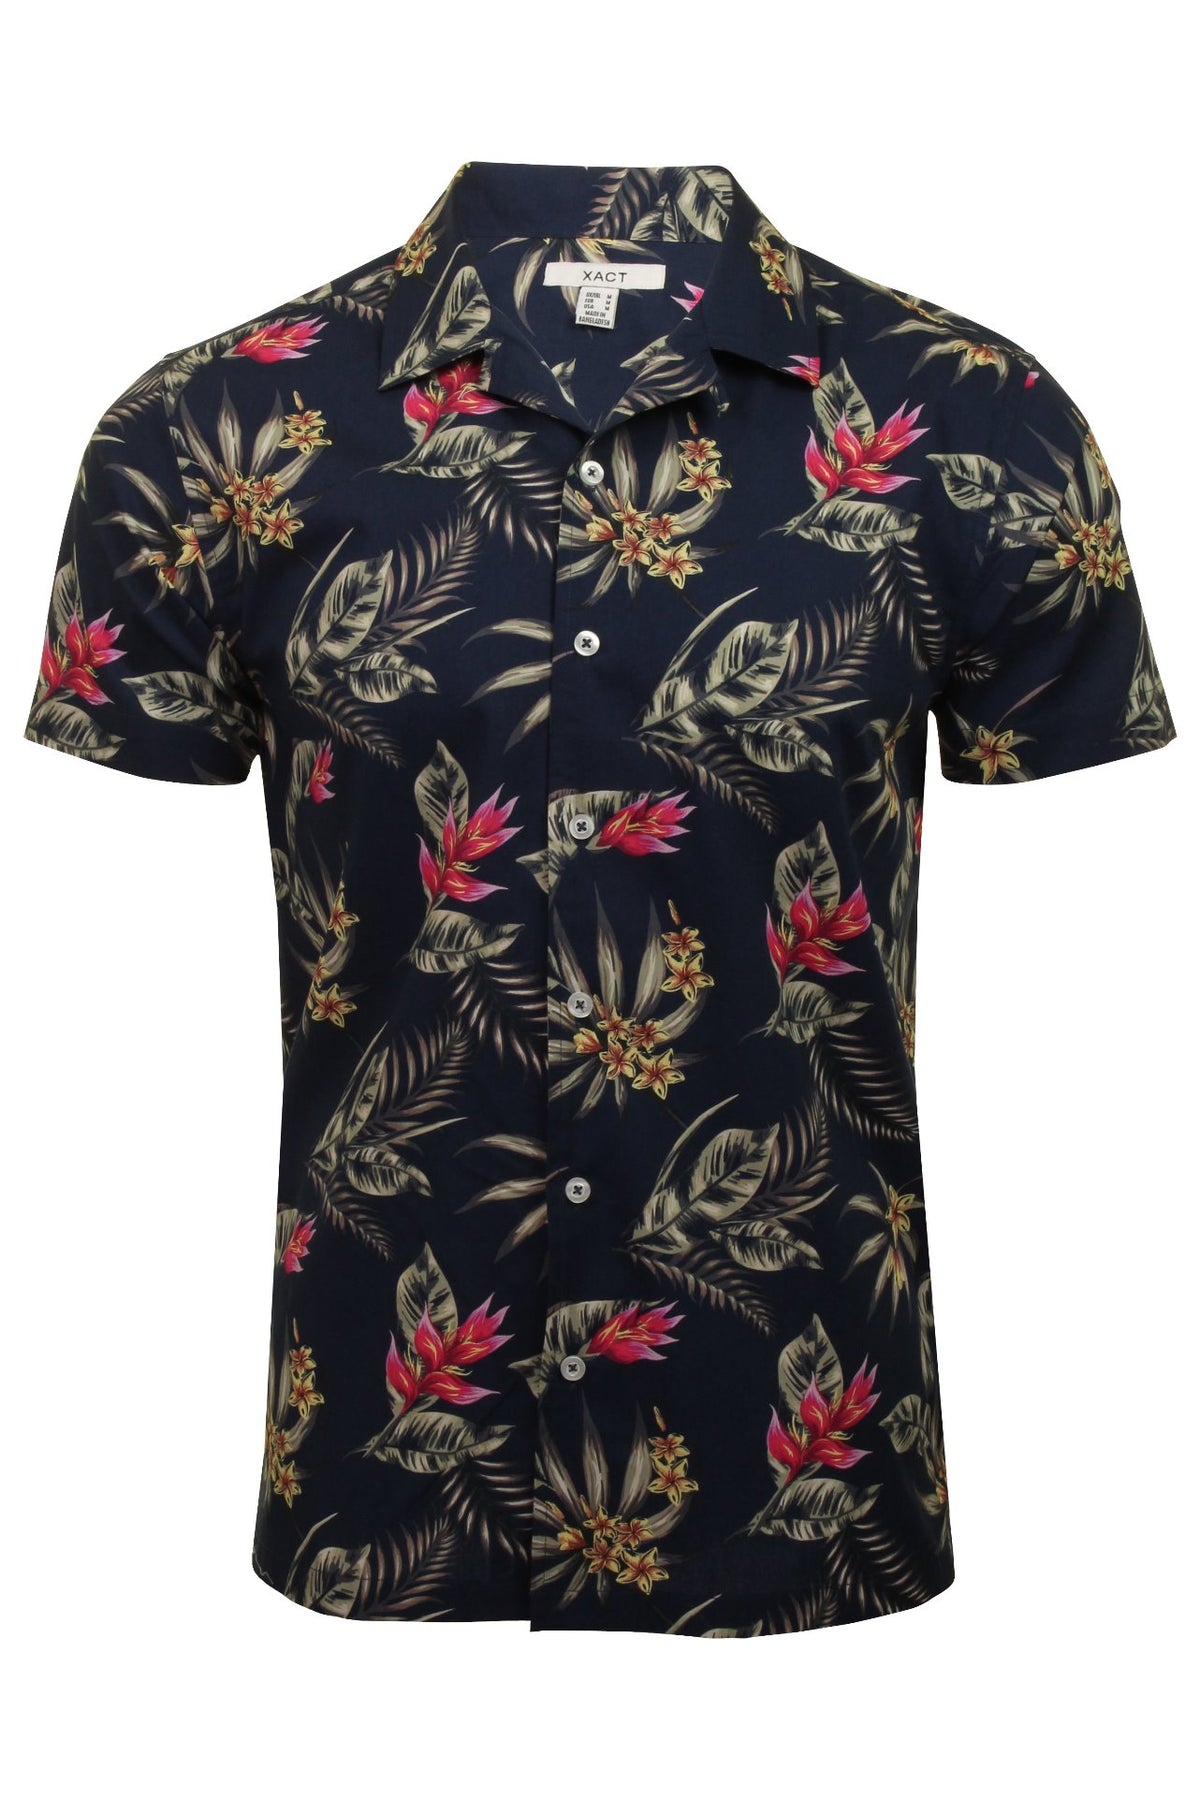 Xact Mens Floral Hawaiian Shirt  Short Sleeved, 01, Xsh1051